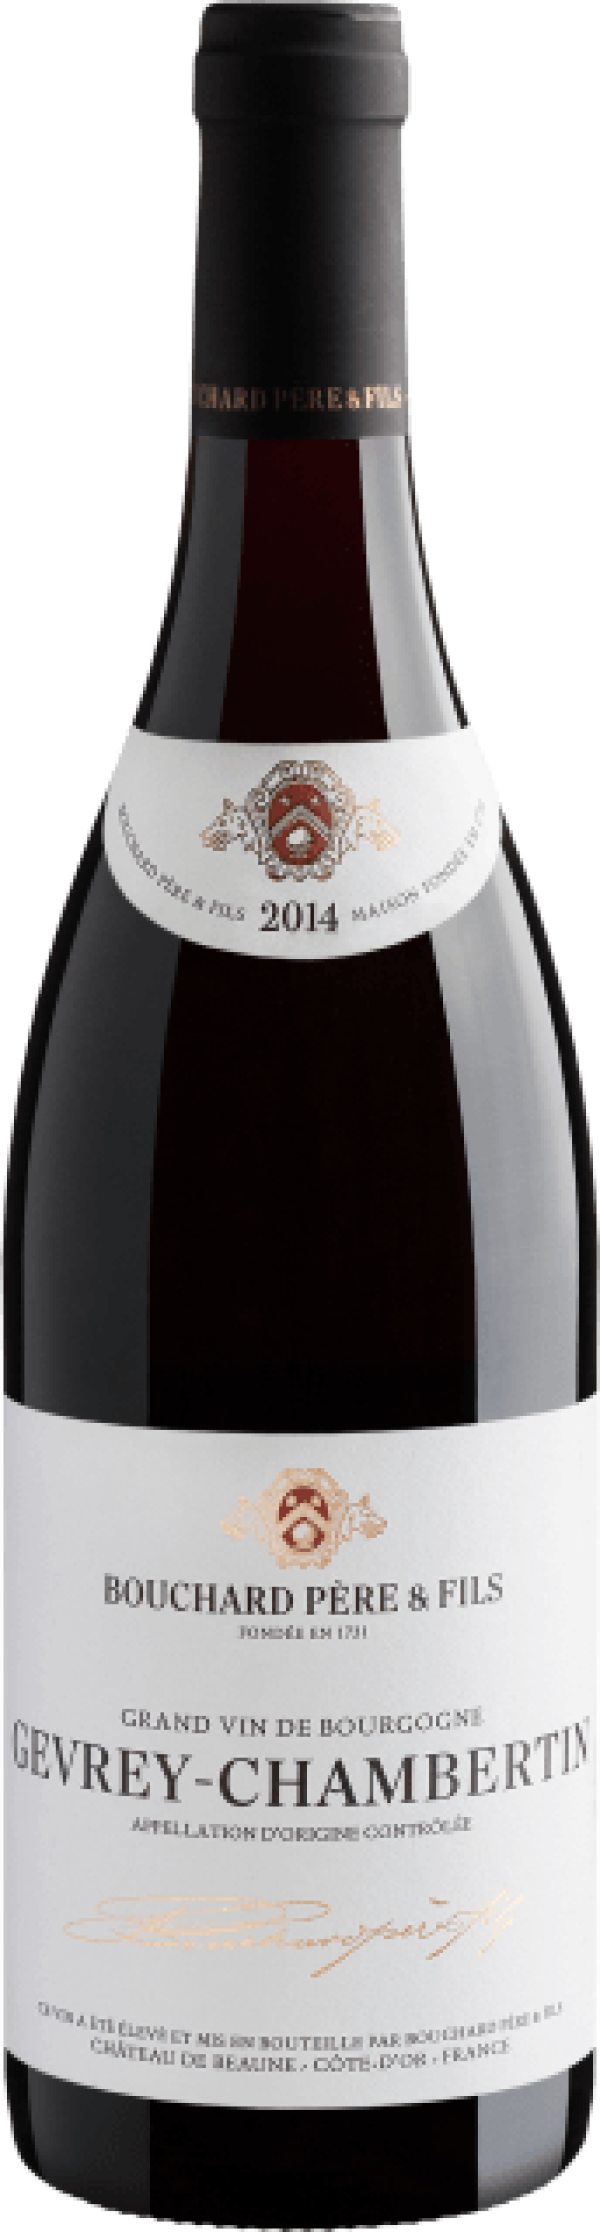 Bouchard Père & Fils Grand Vin de Bourgogne Gevrey-Chambertin AOC 2014